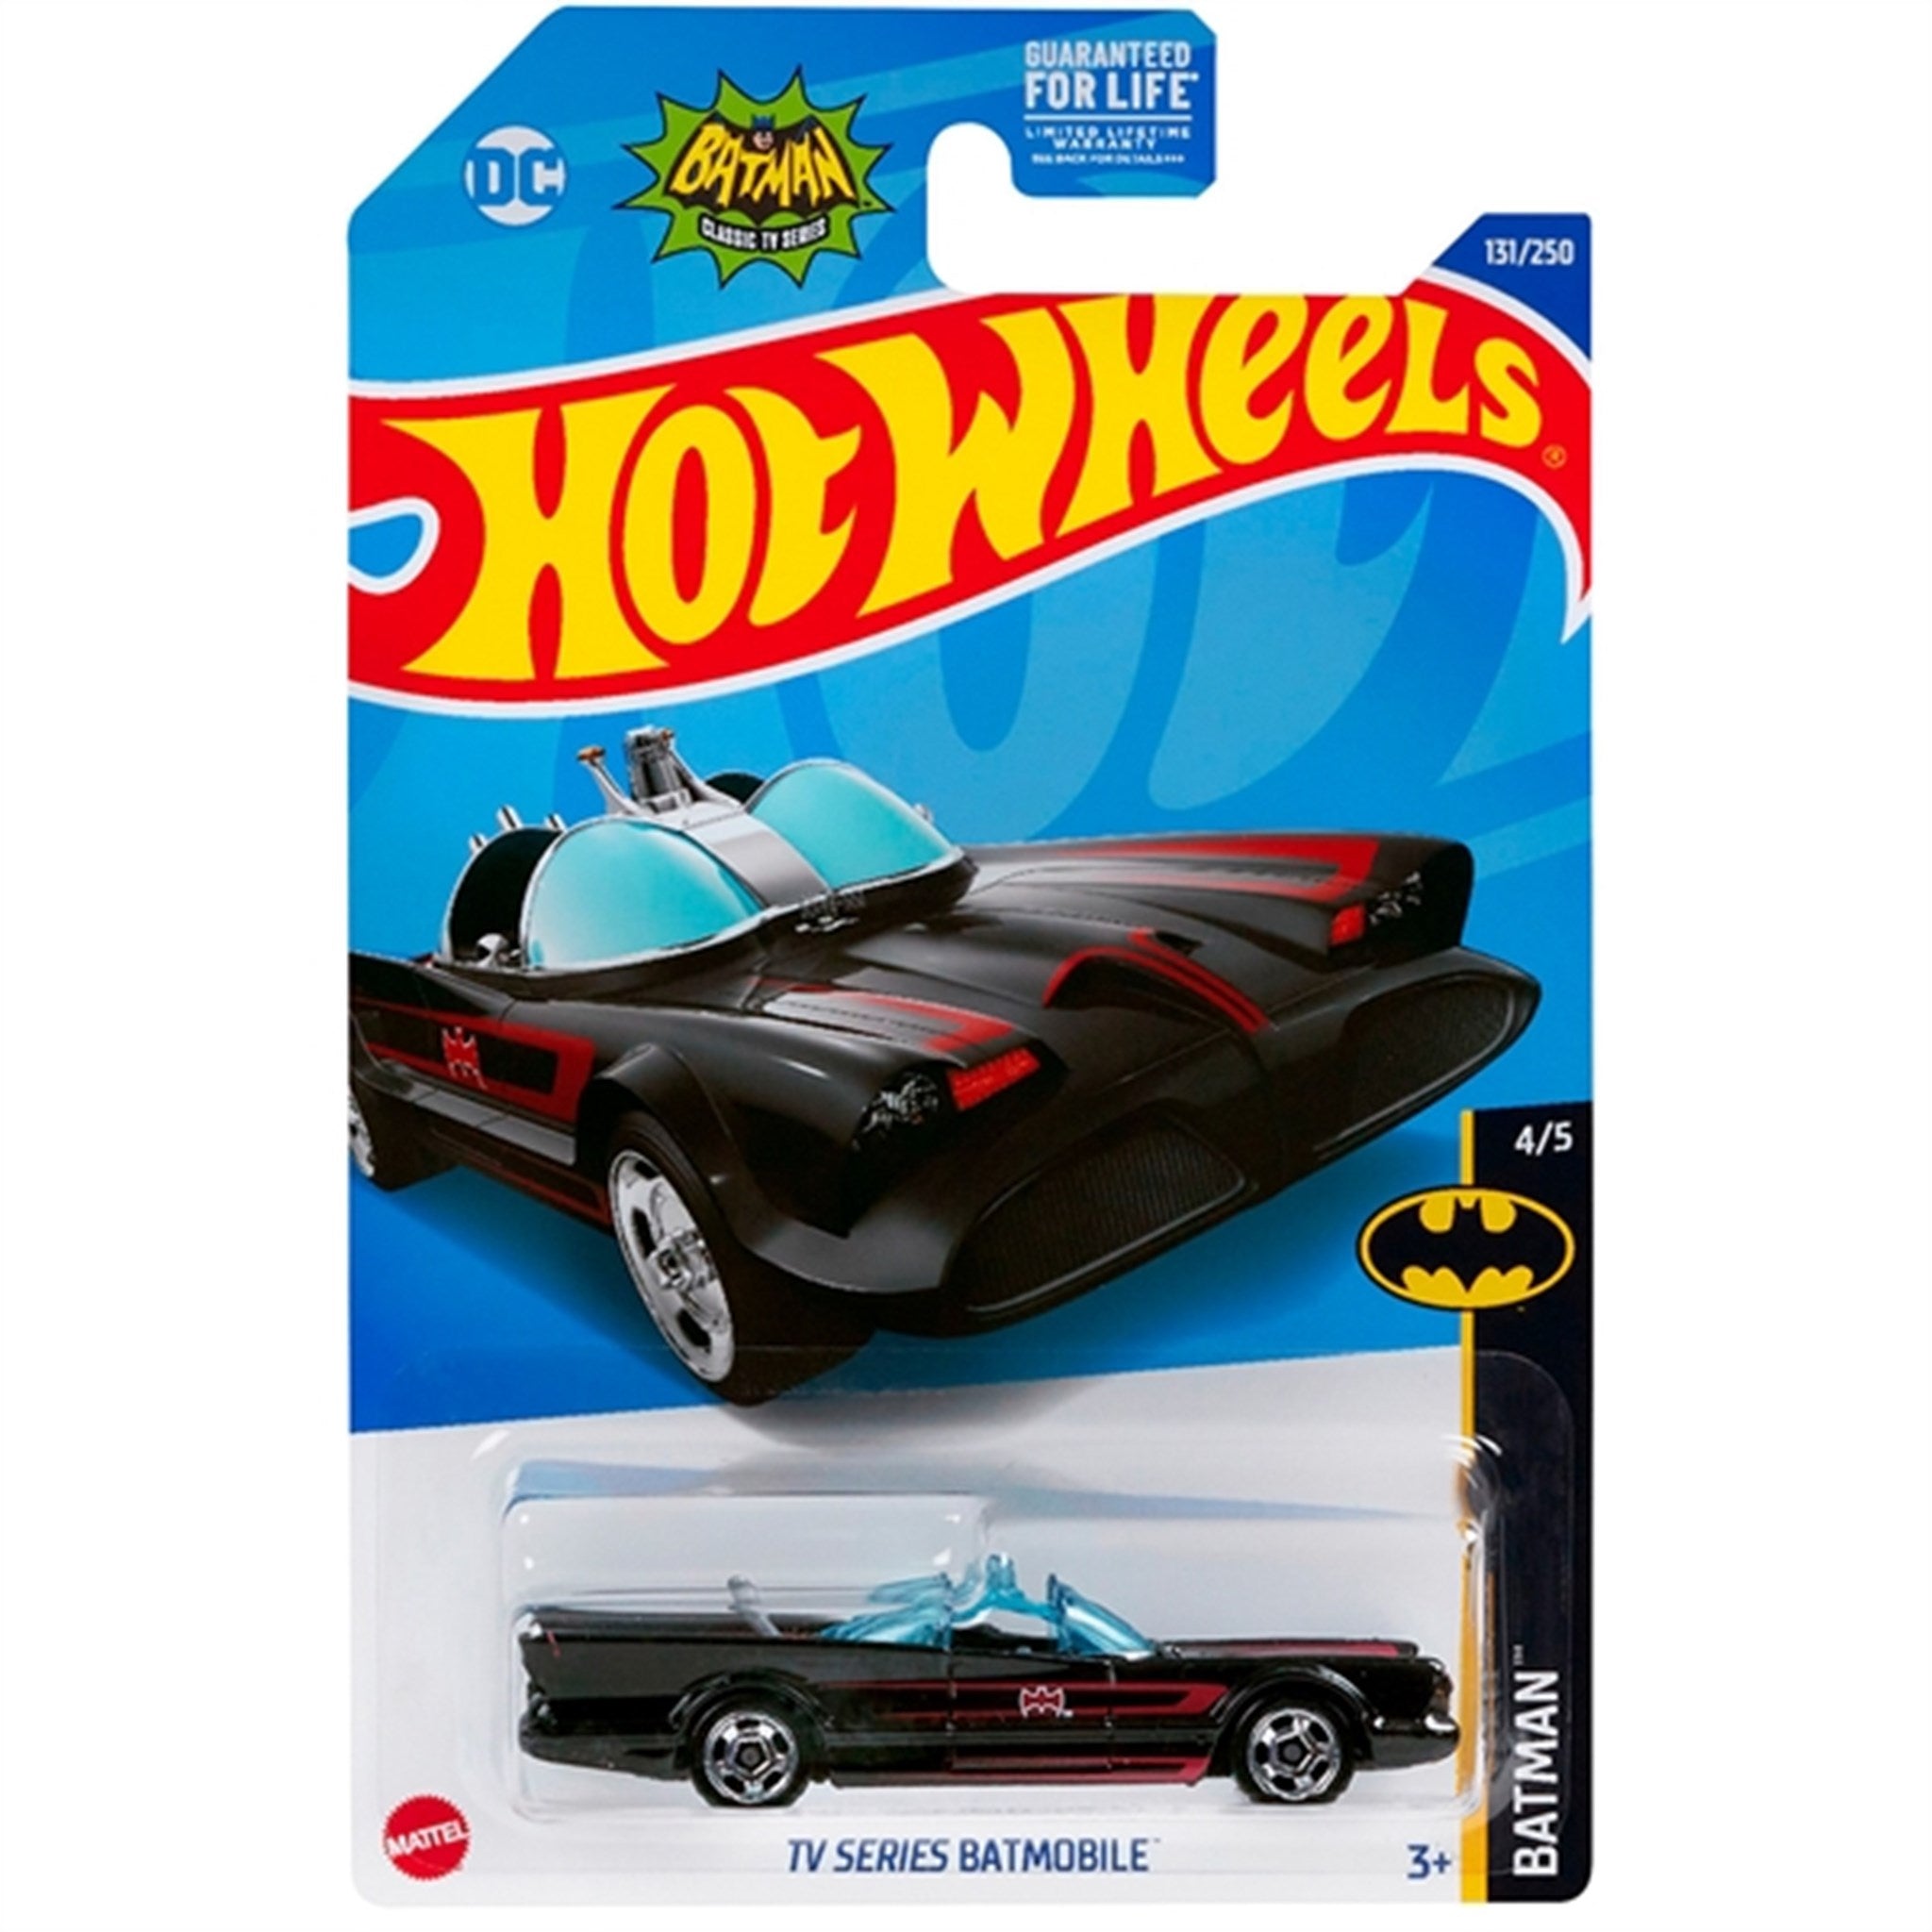 Hot Wheels Basics TV Series Batmobile